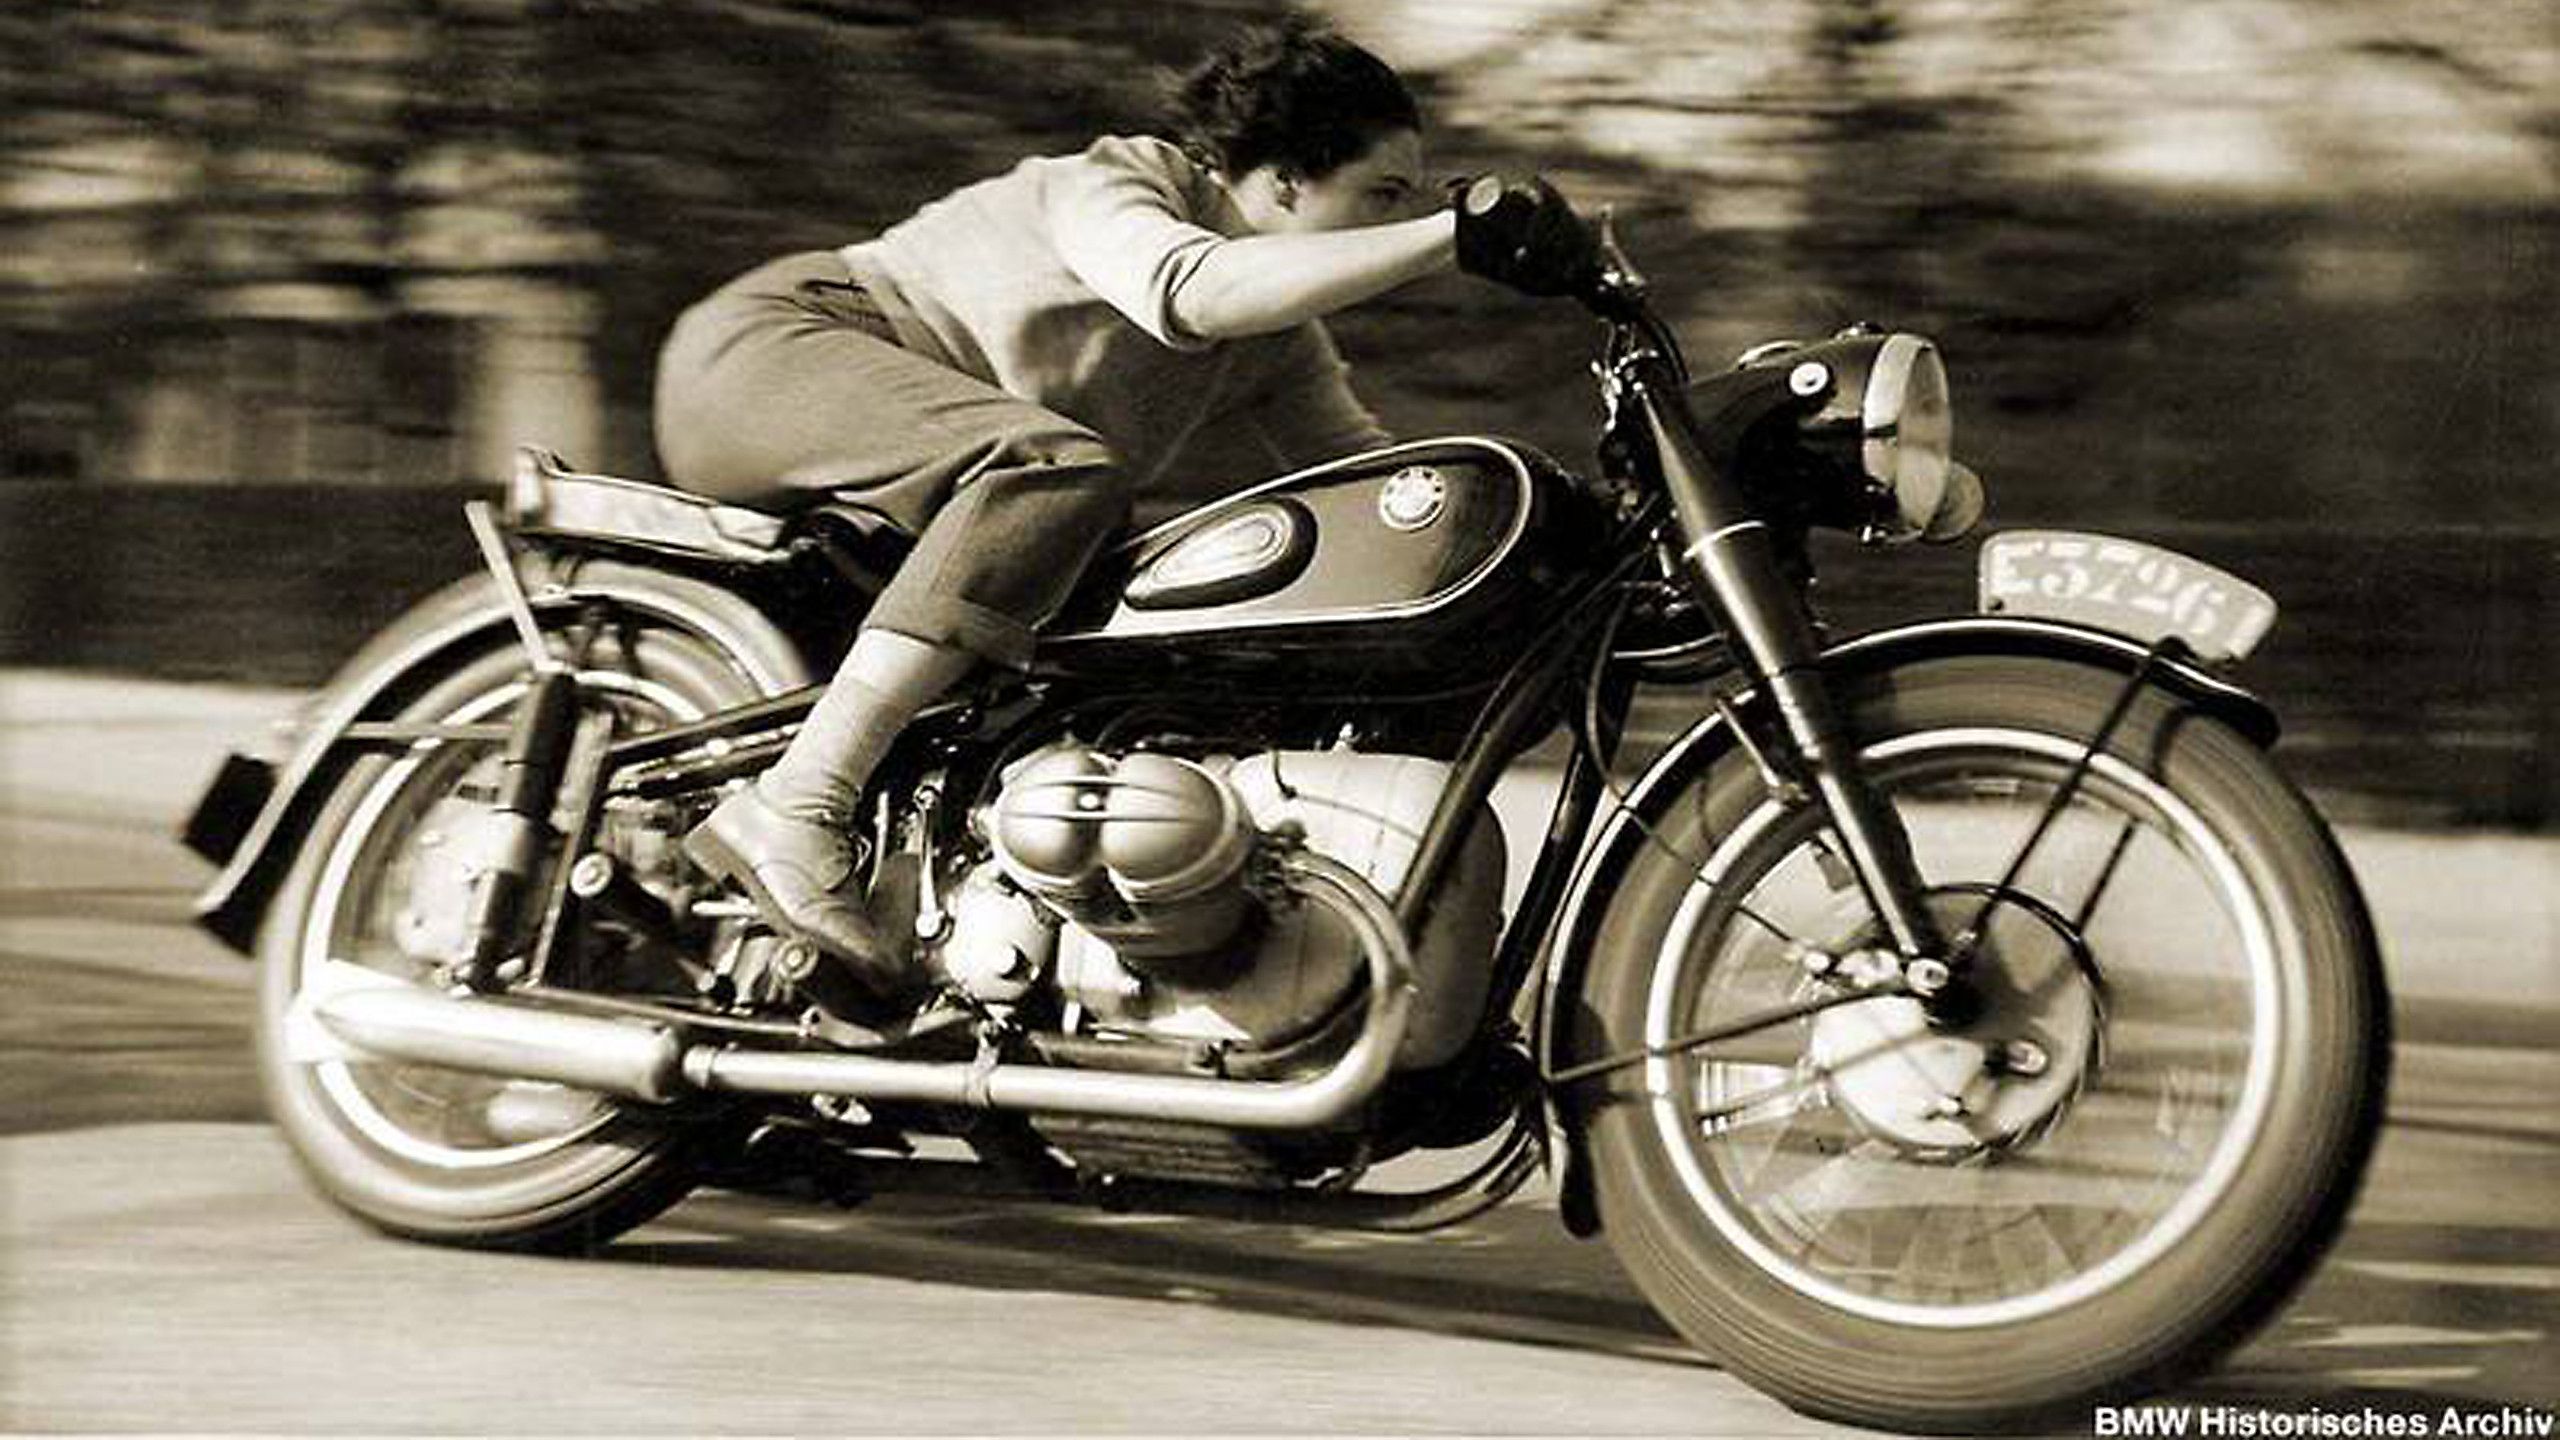 Vintage Motorcycle Wallpaper Background Free Download > SubWallpaper